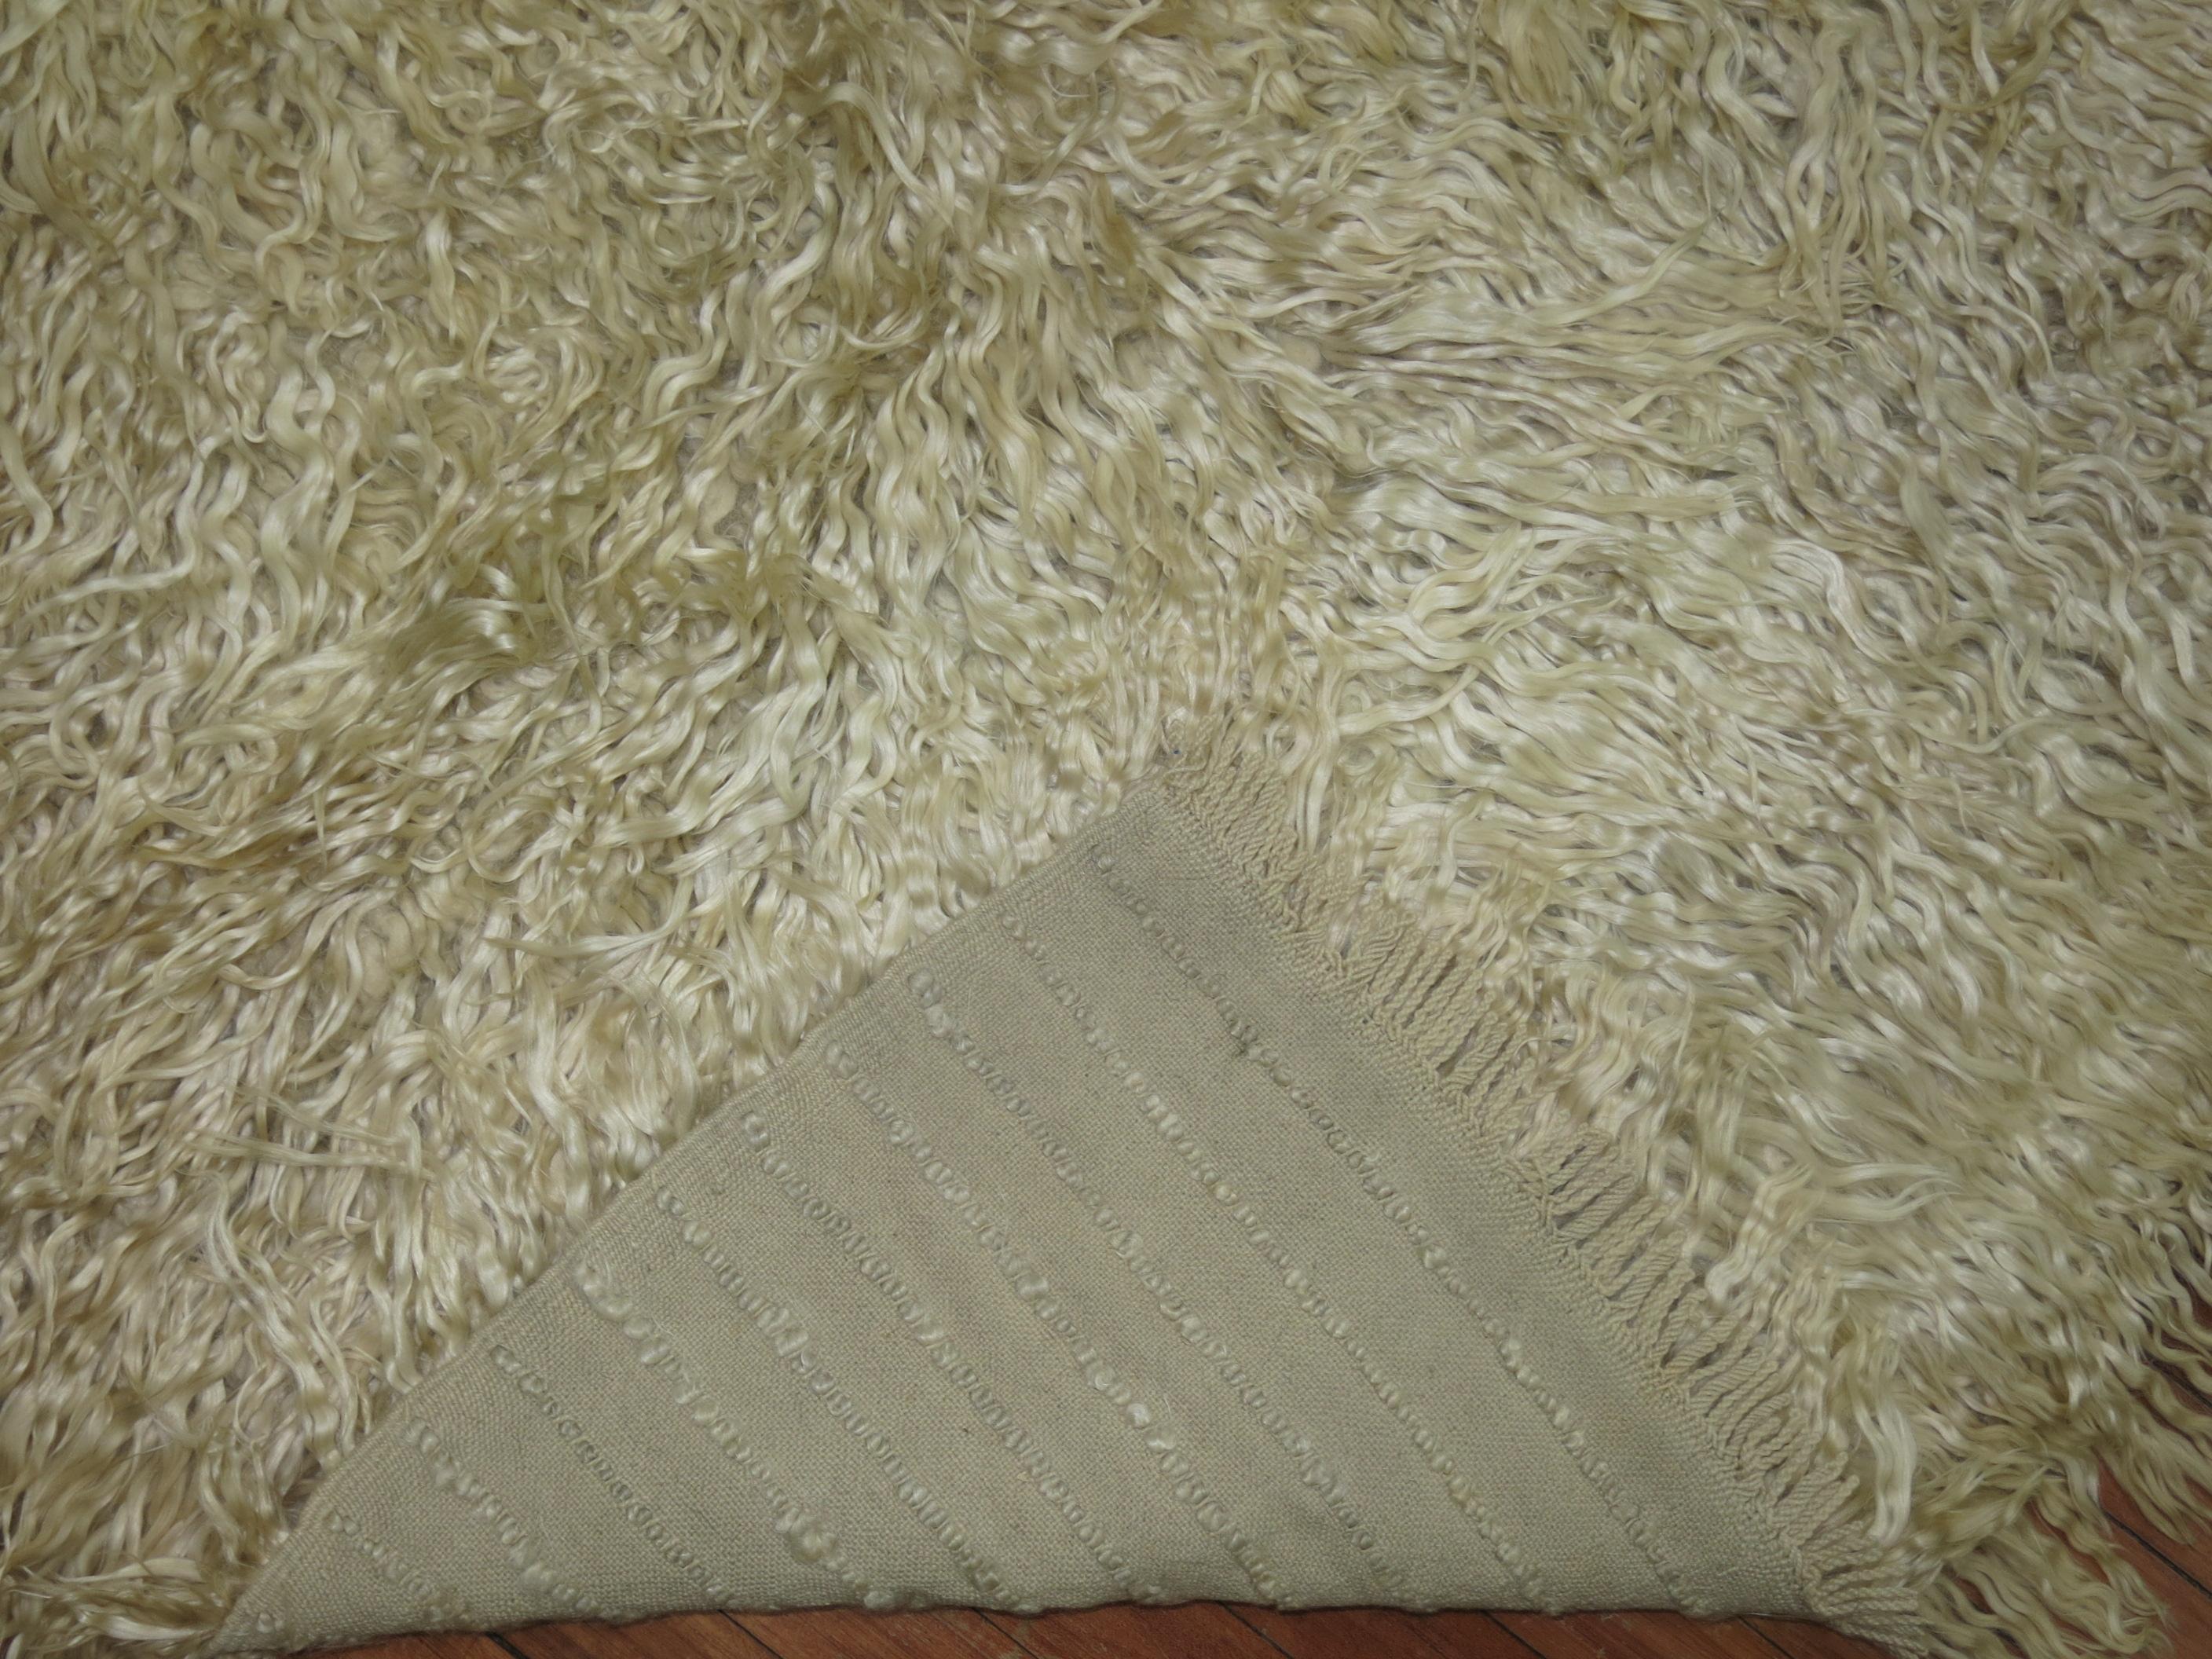 Monotone handwoven cream colored Turkish Shag rug.